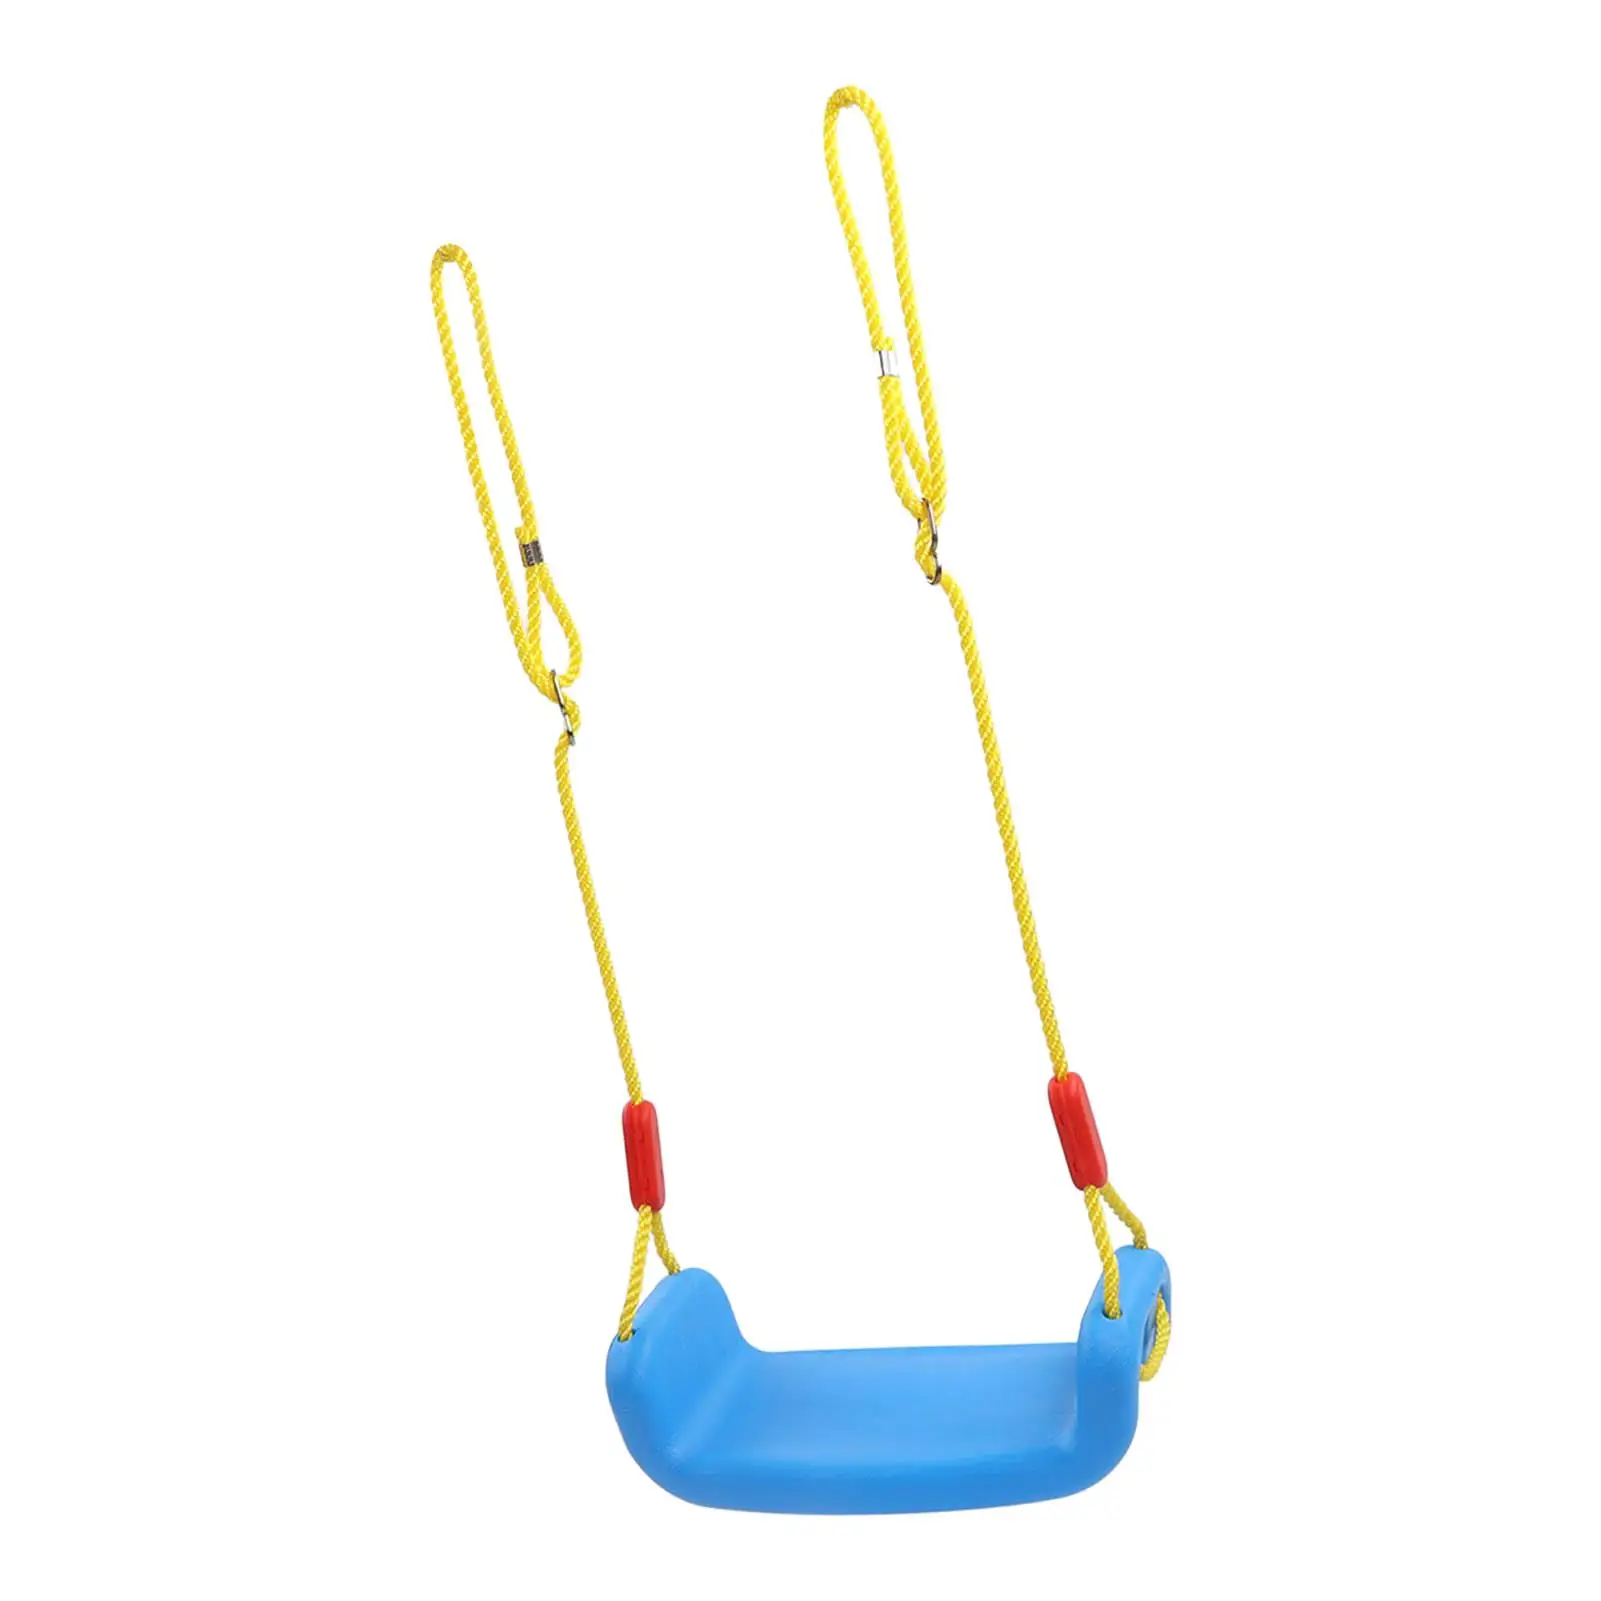 Children's Non-Slip Plastic Swing Seat - 80kg Load Capacity, Easy Installation - Perfect Gift